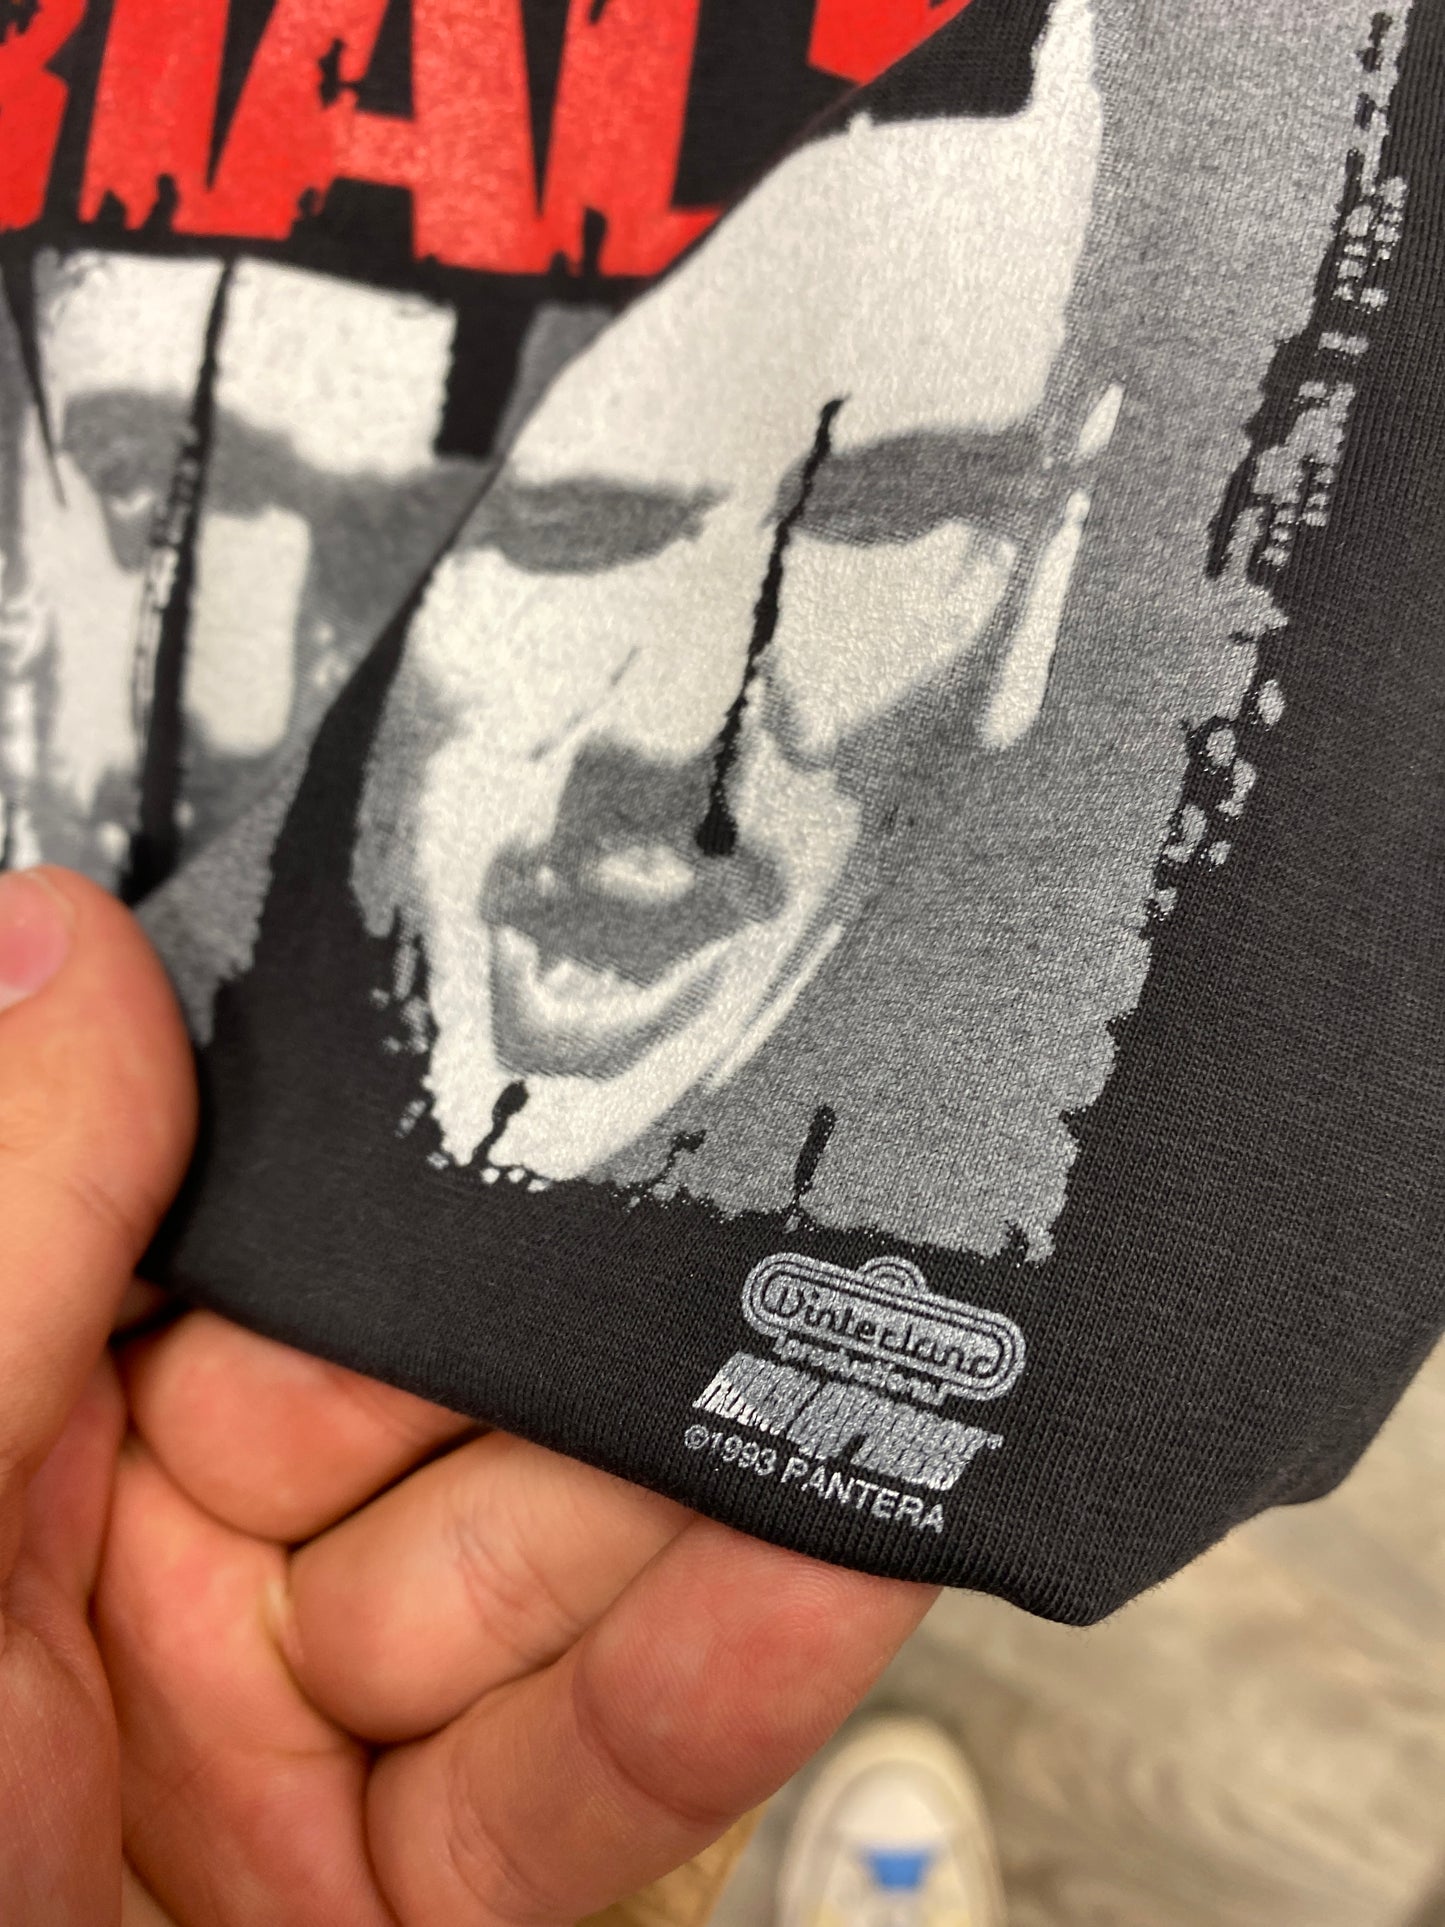 Vintage Pantera "Vulgar Display of Power" 1993 t-shirt - size XL